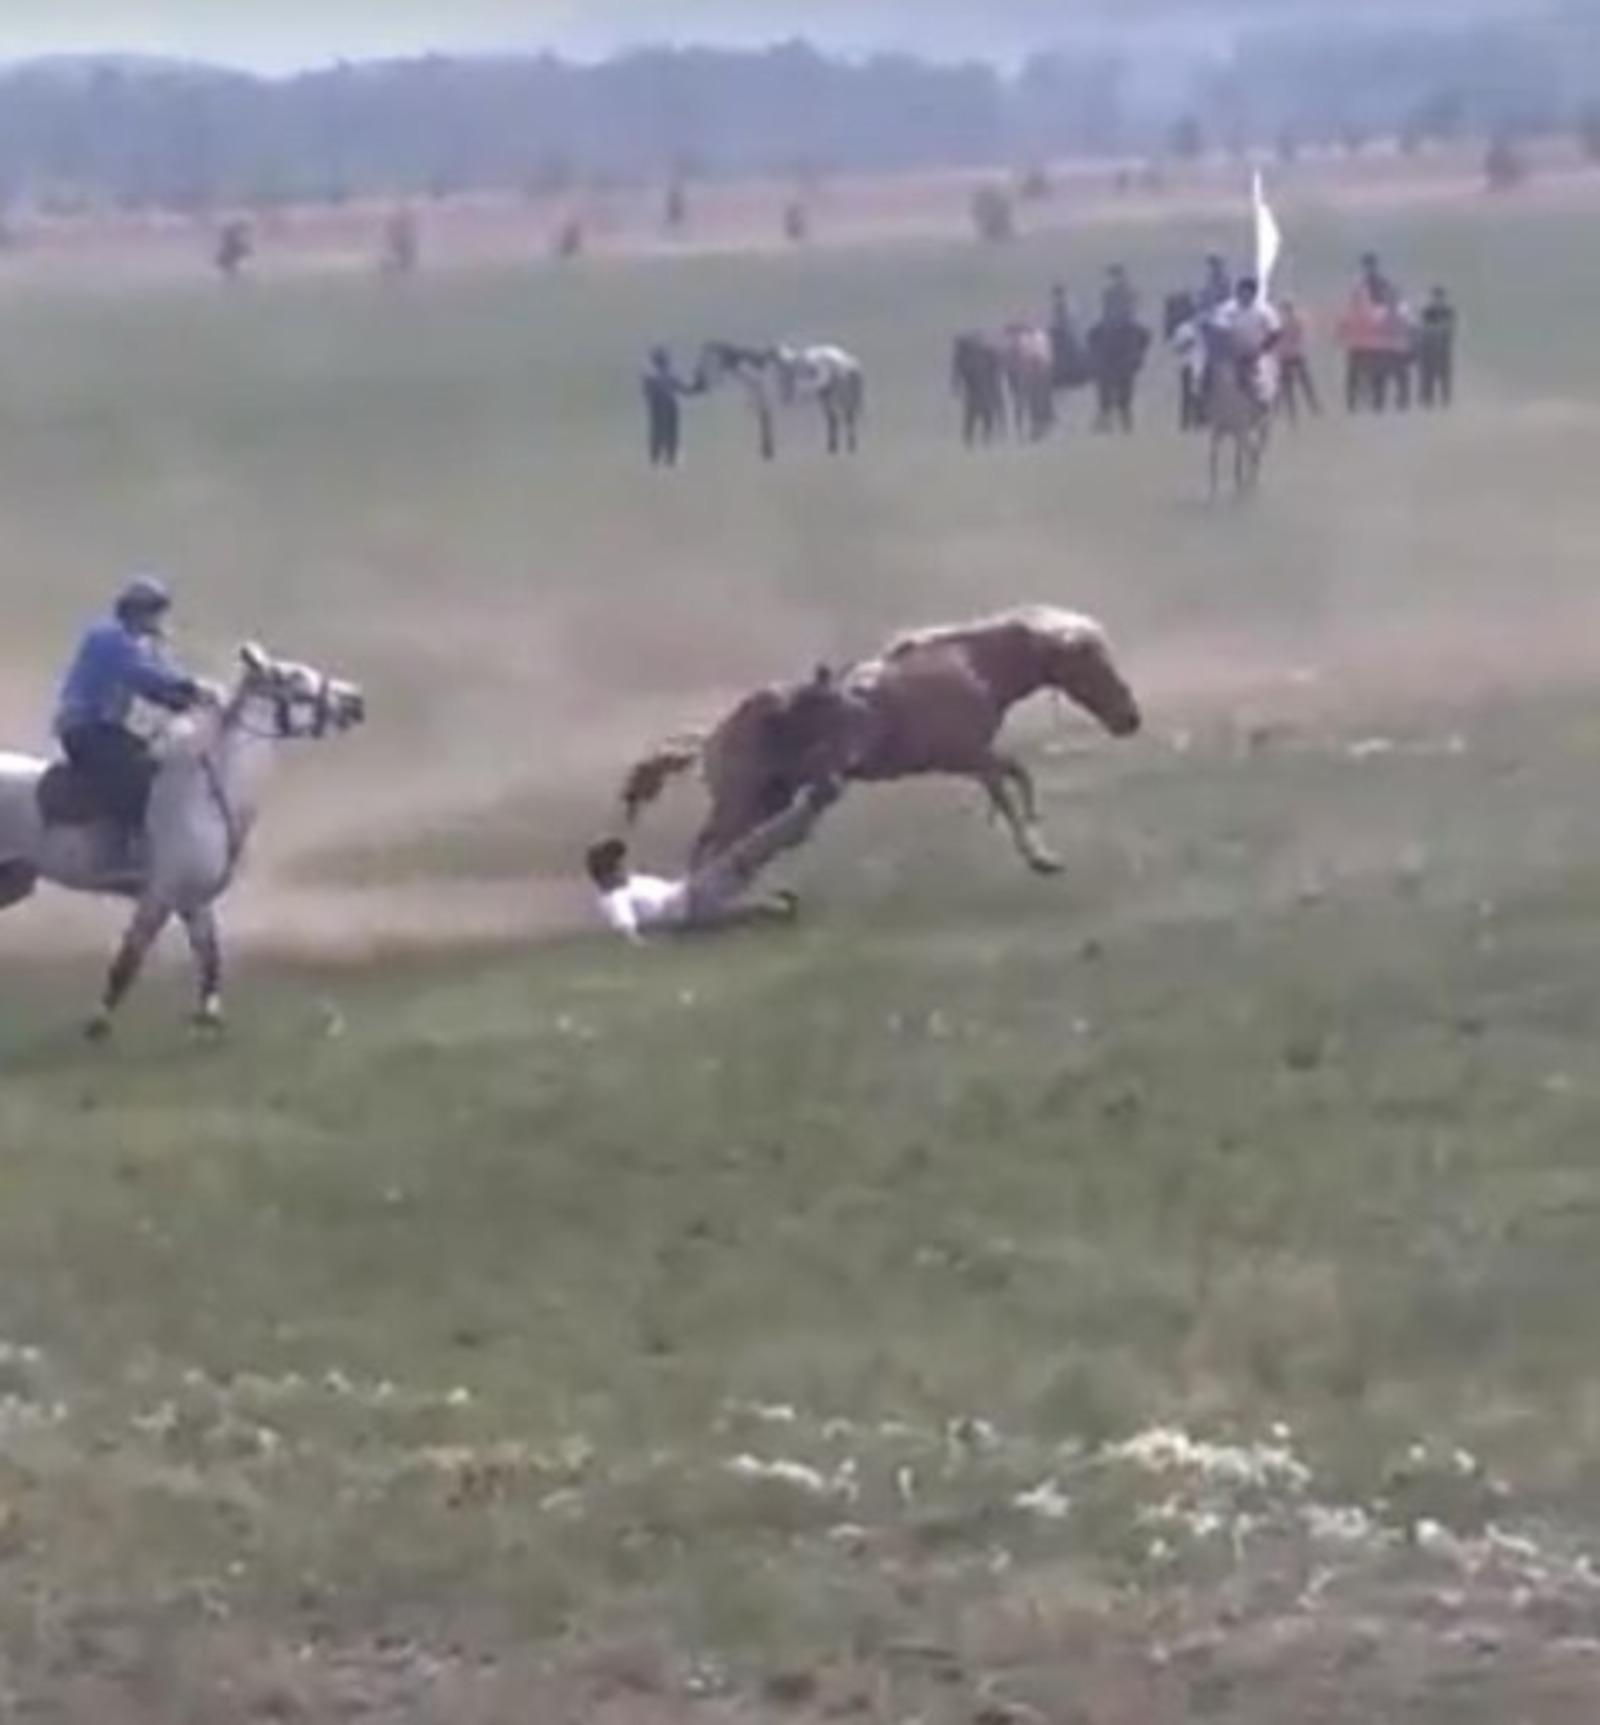 На сабантуе в Башкирии лошадь сбросила и едва не затоптала всадника